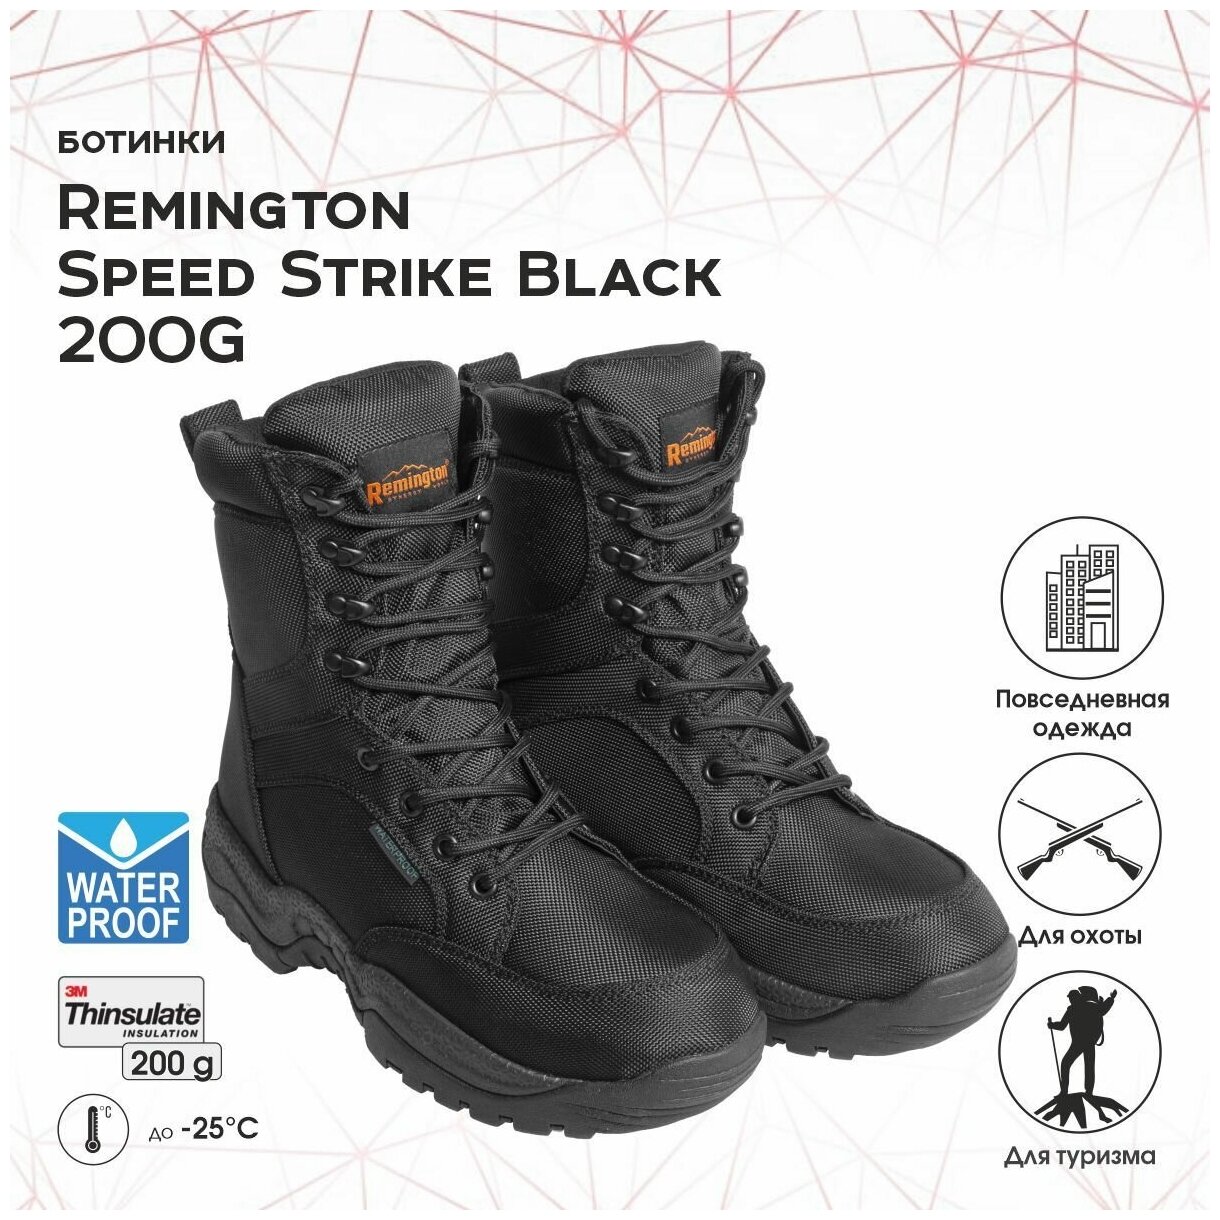 Ботинки Reminton Speed Strike Black 200g thinsulate р. 42